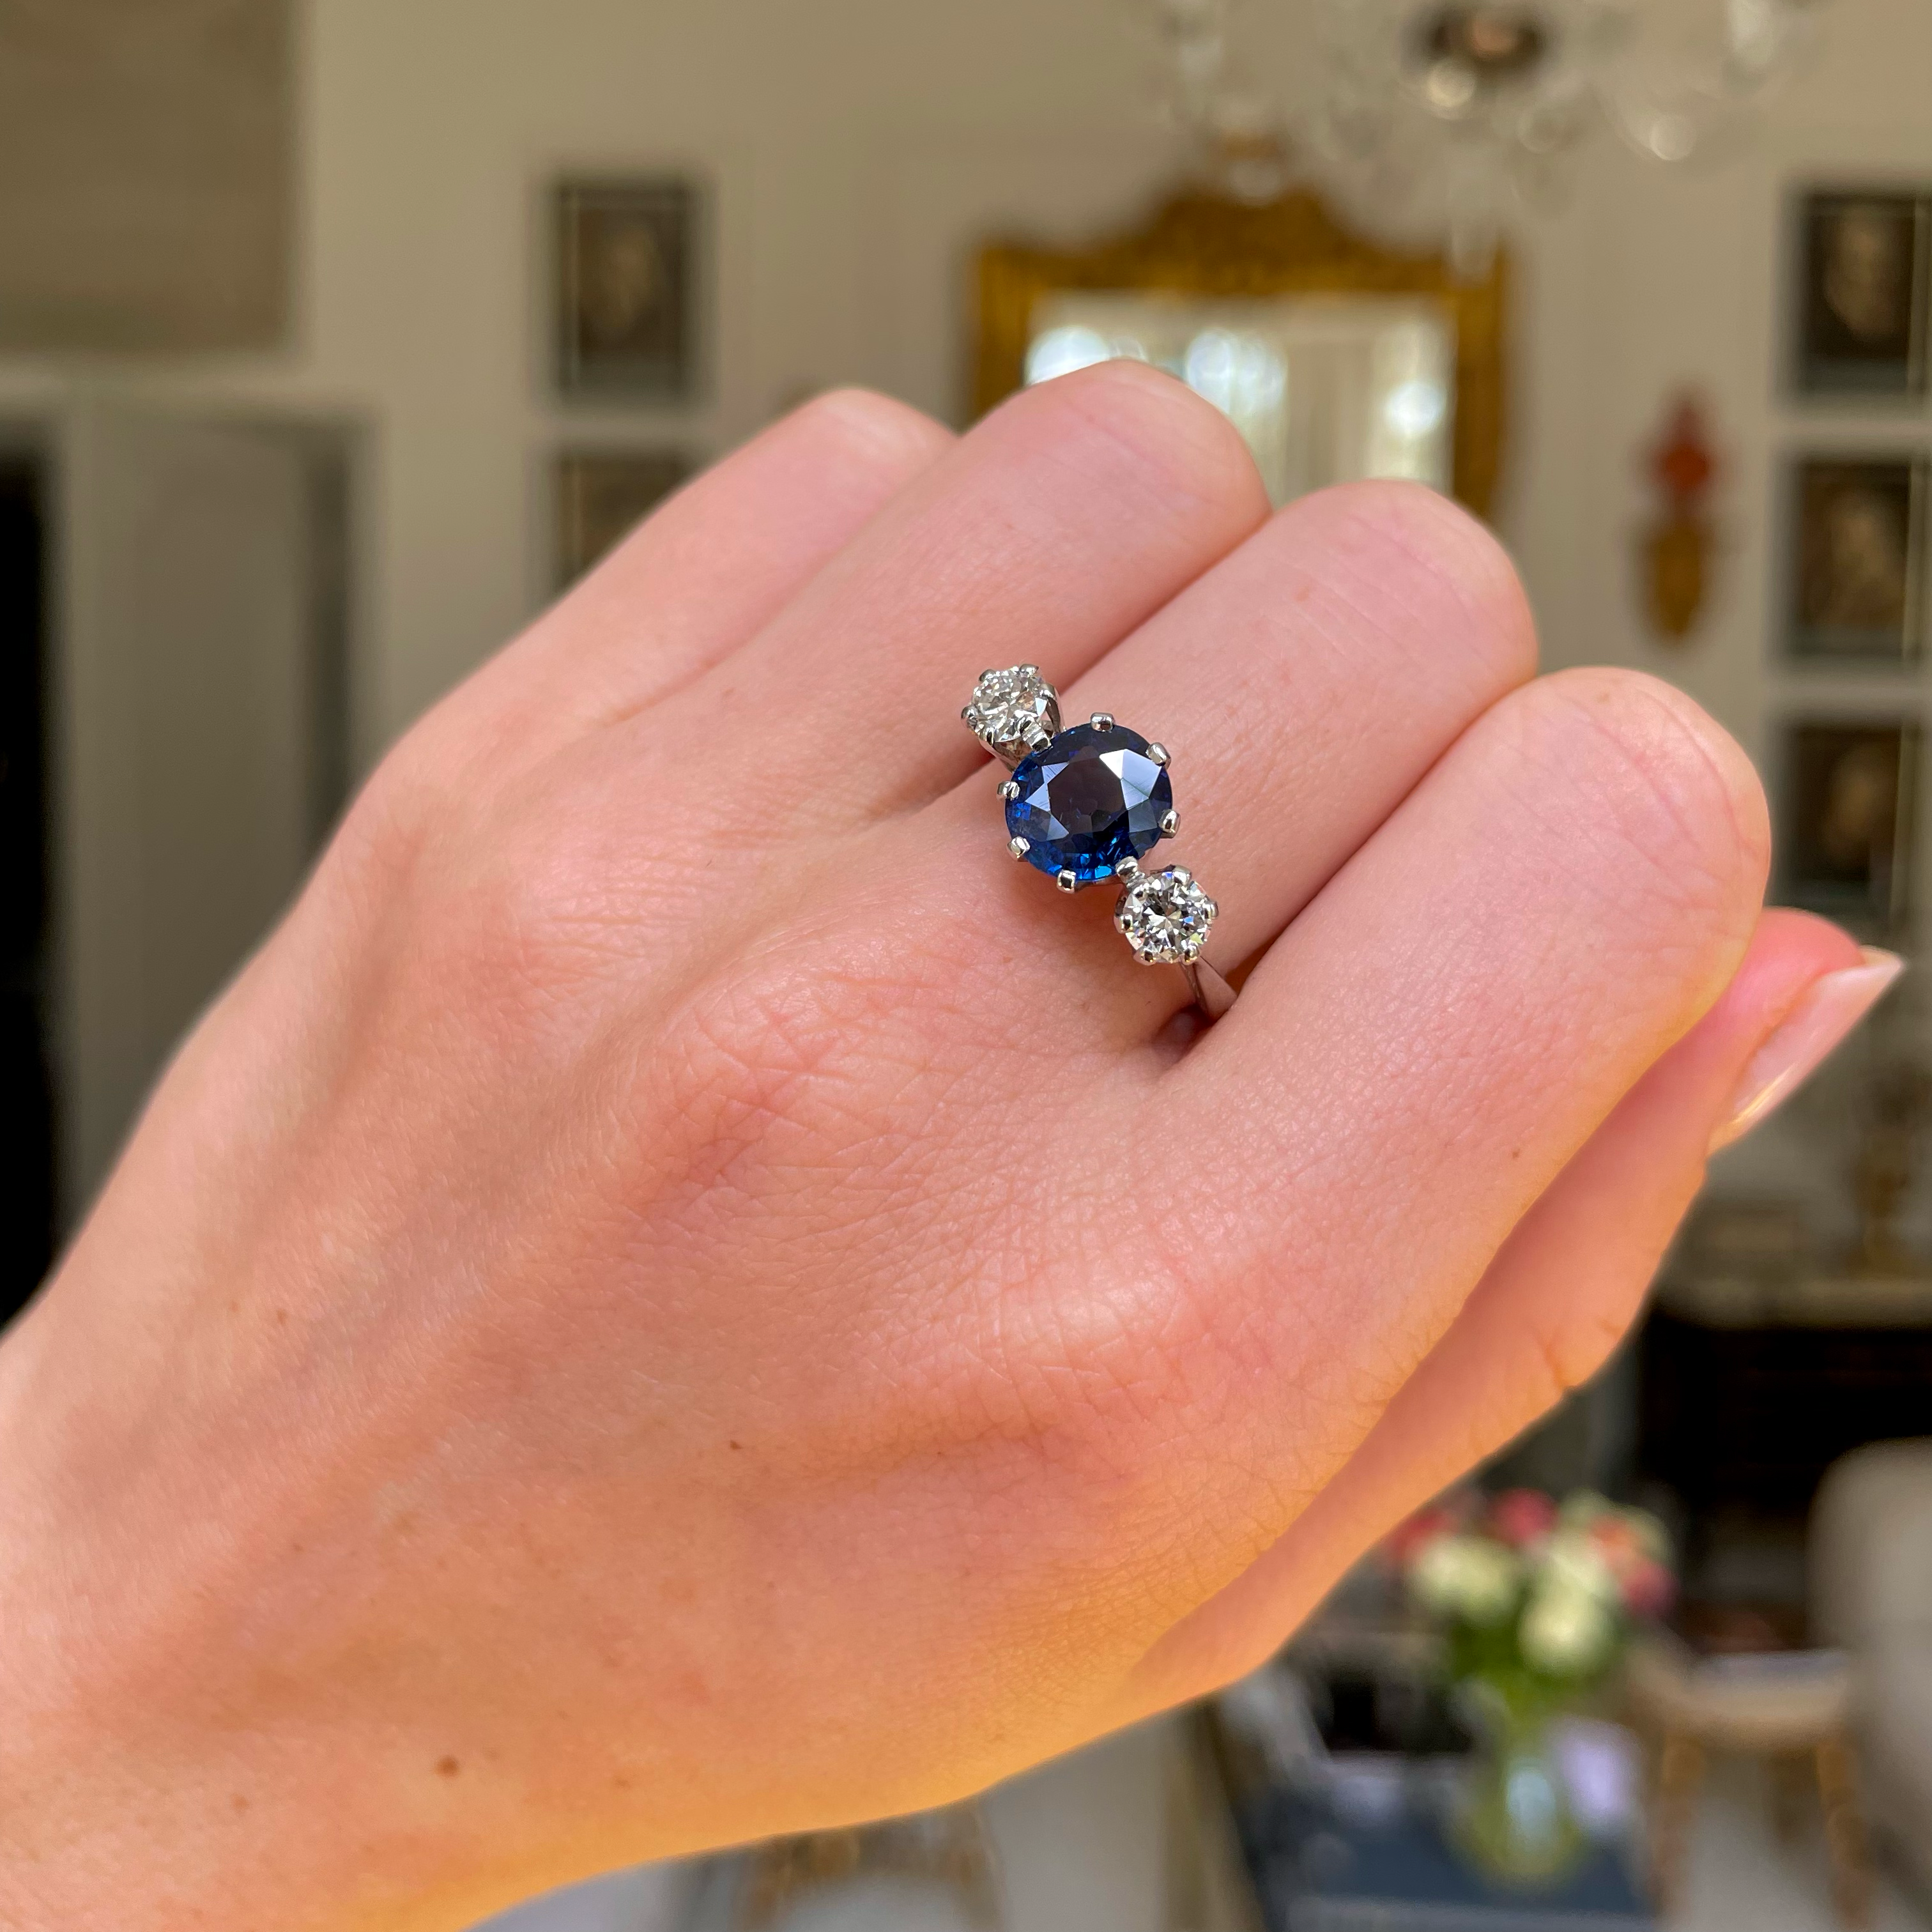 Buy Gift For Her Jewelry | Gemstone Handmade Gold Plated Three Stone Ring |  Multi Shape Adjustable Ring | Emerald Quartz, Pink Fuchsia & Moonstone  Prong Sett Ring | 1829)3F at Amazon.in